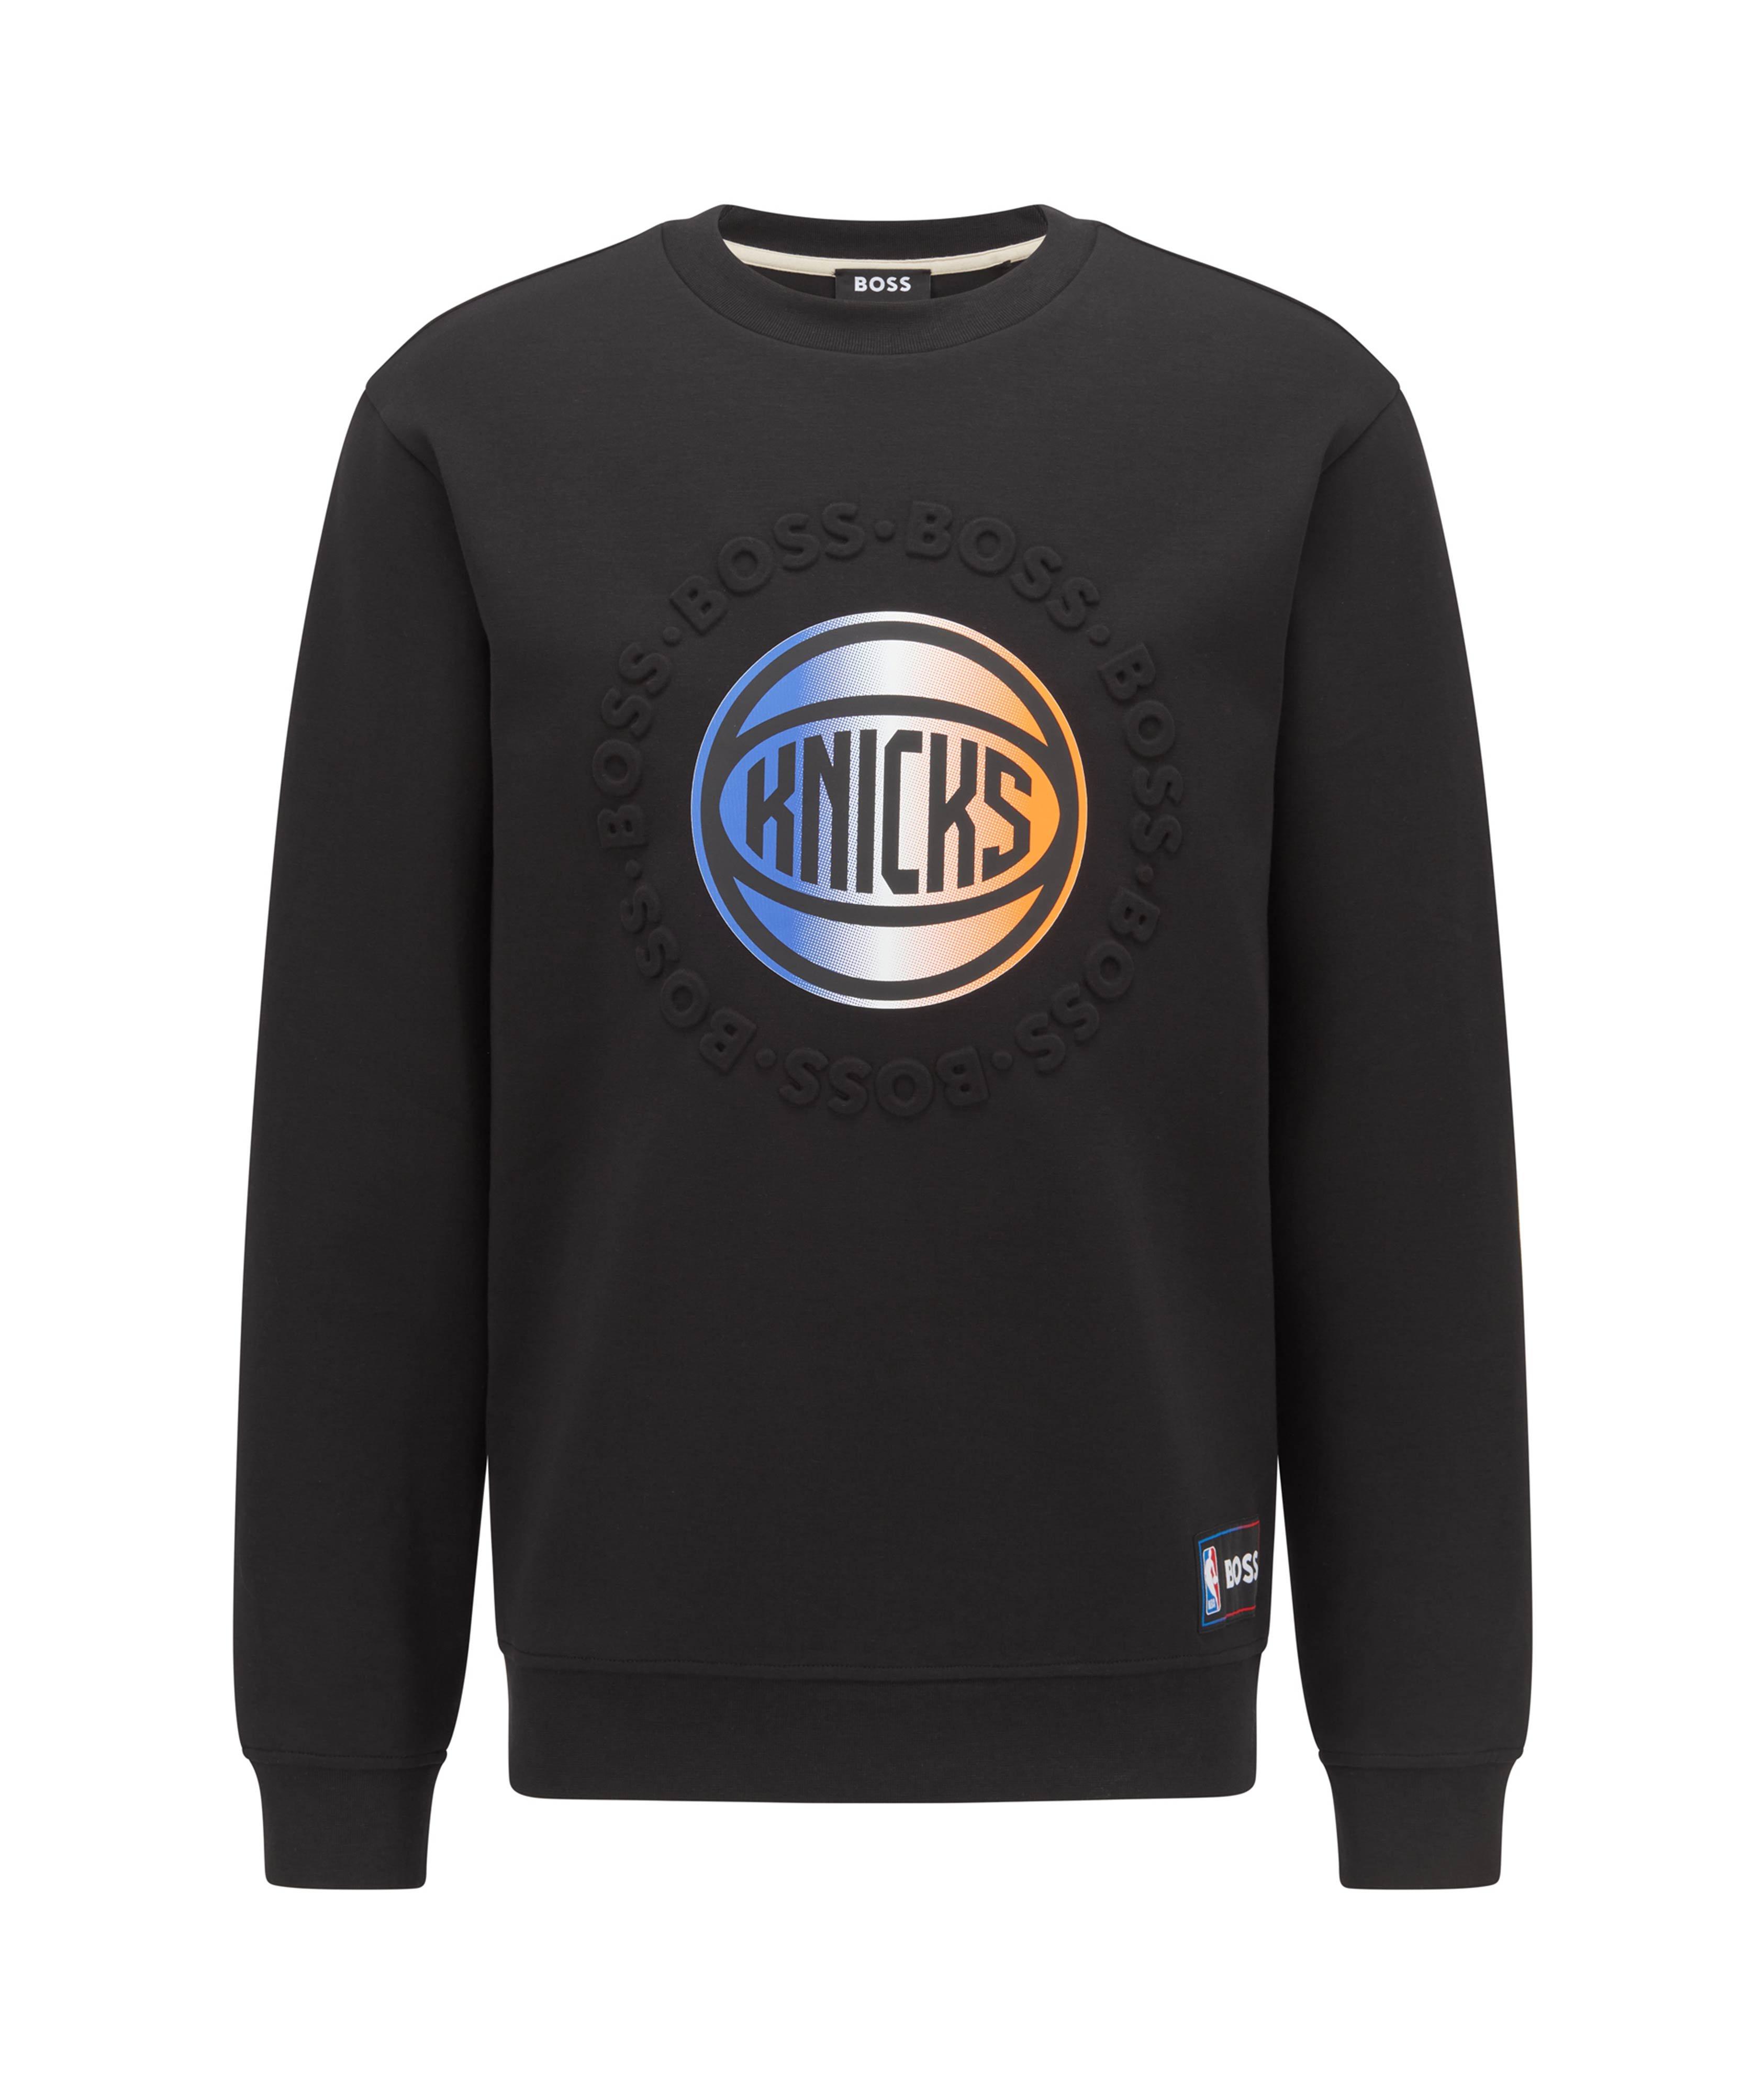 Pull avec logo des Knicks, collection NBA image 0